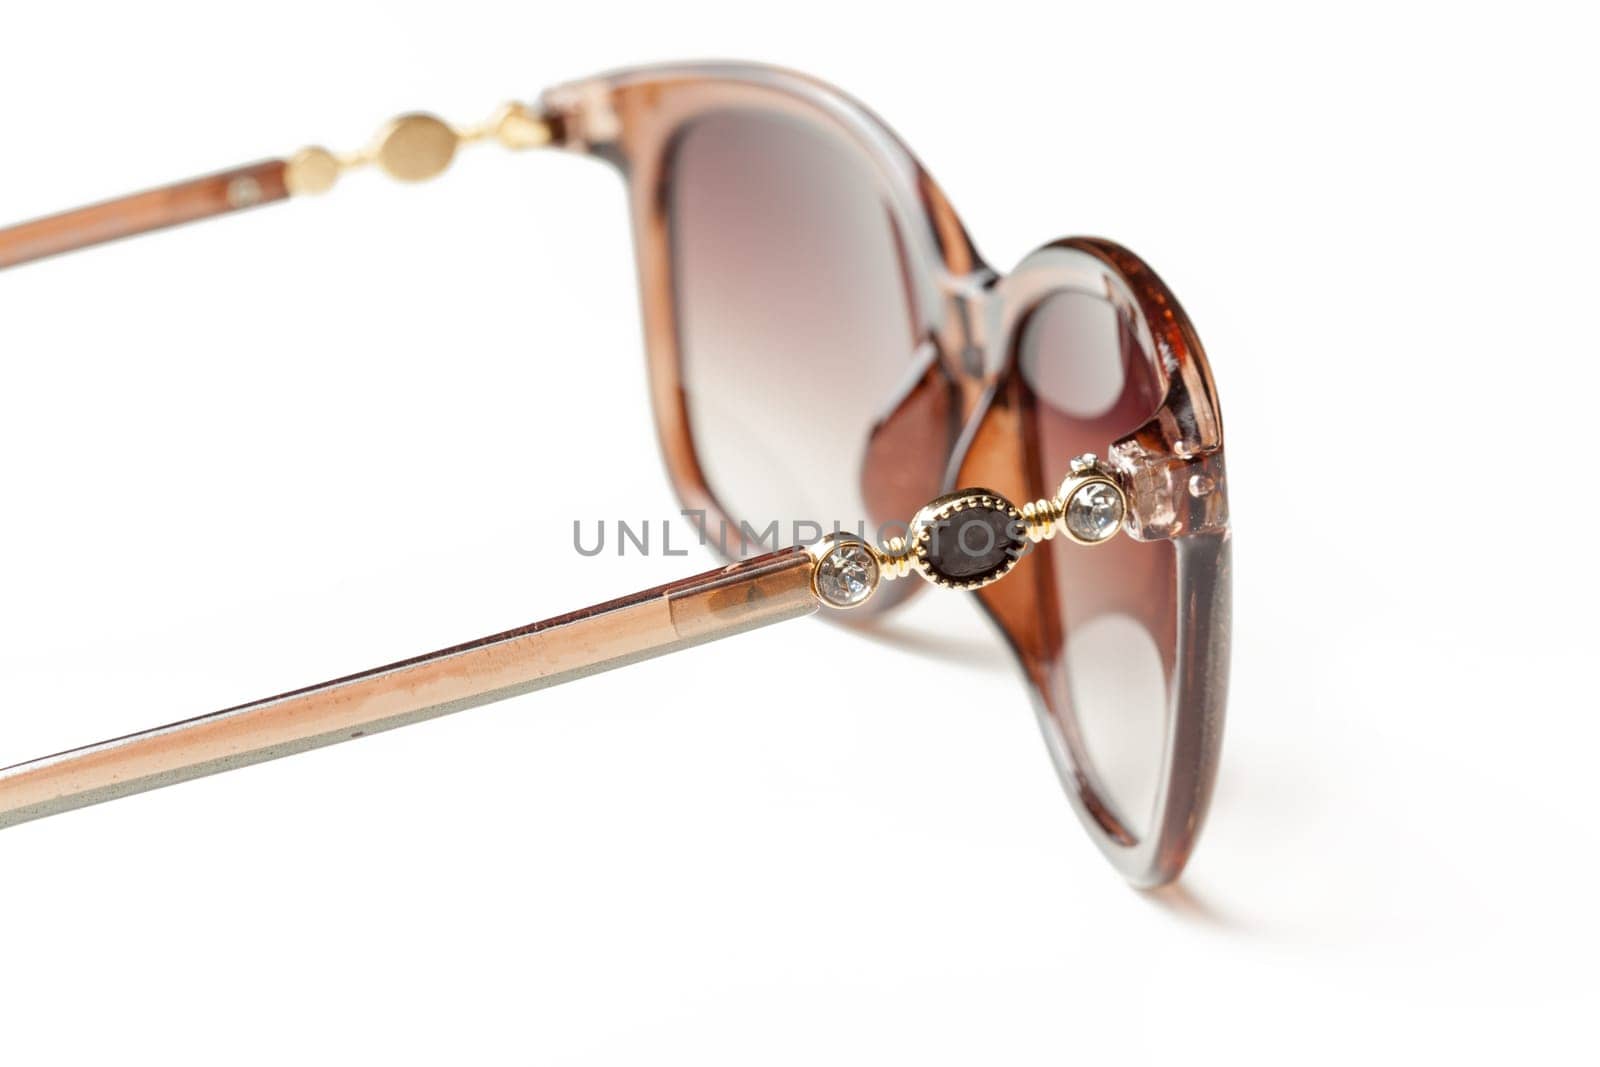 Fashion sunglasses isolated on white by Fabrikasimf